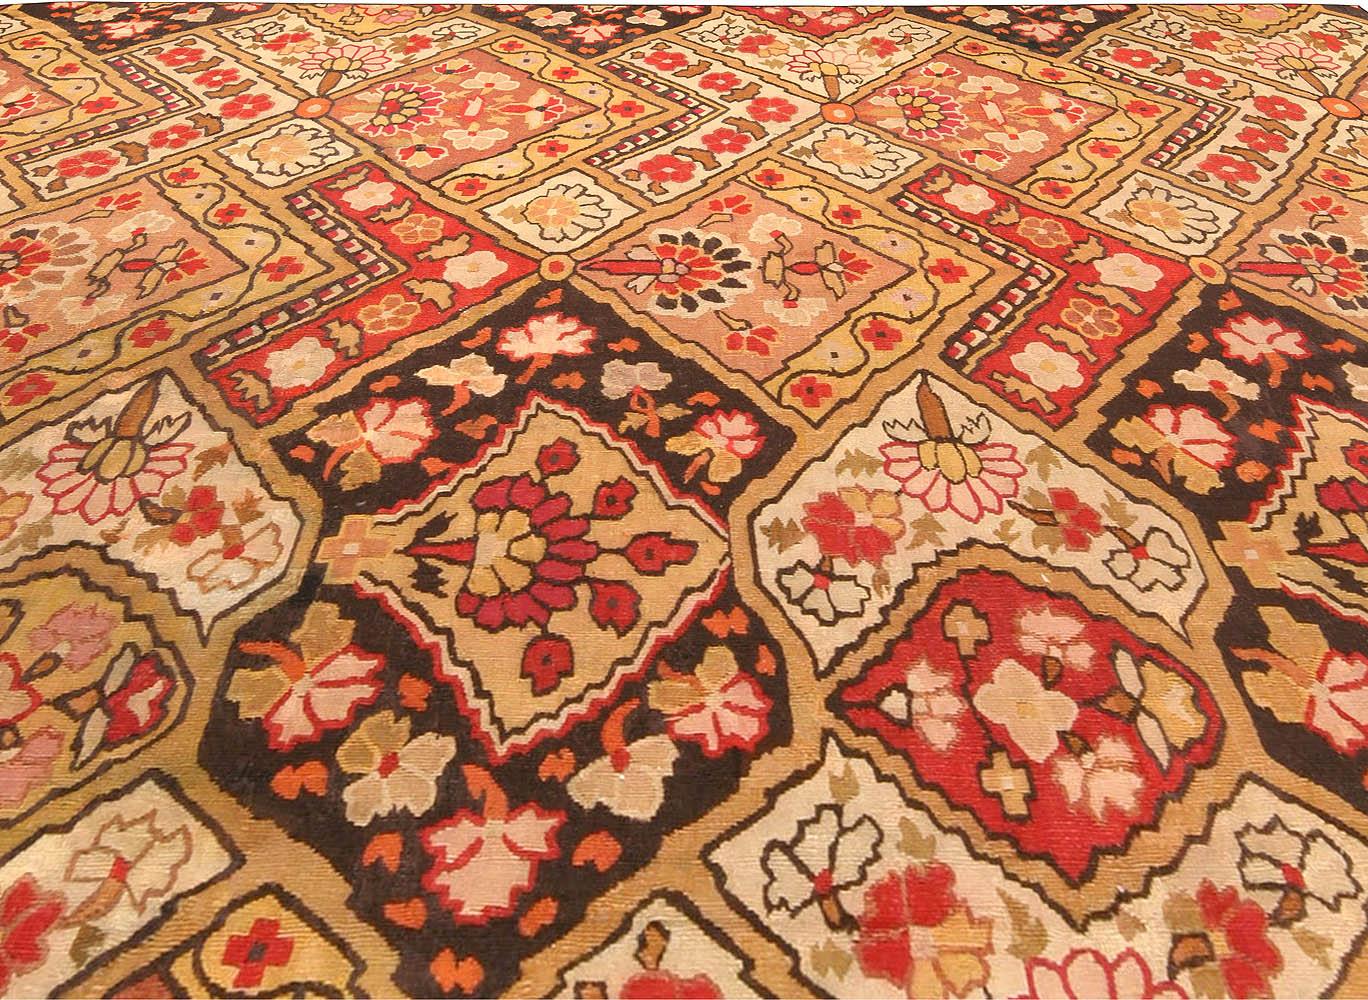 Authentic 19th century Russian Bessarabian carpet (fragment).
Size: 8'4